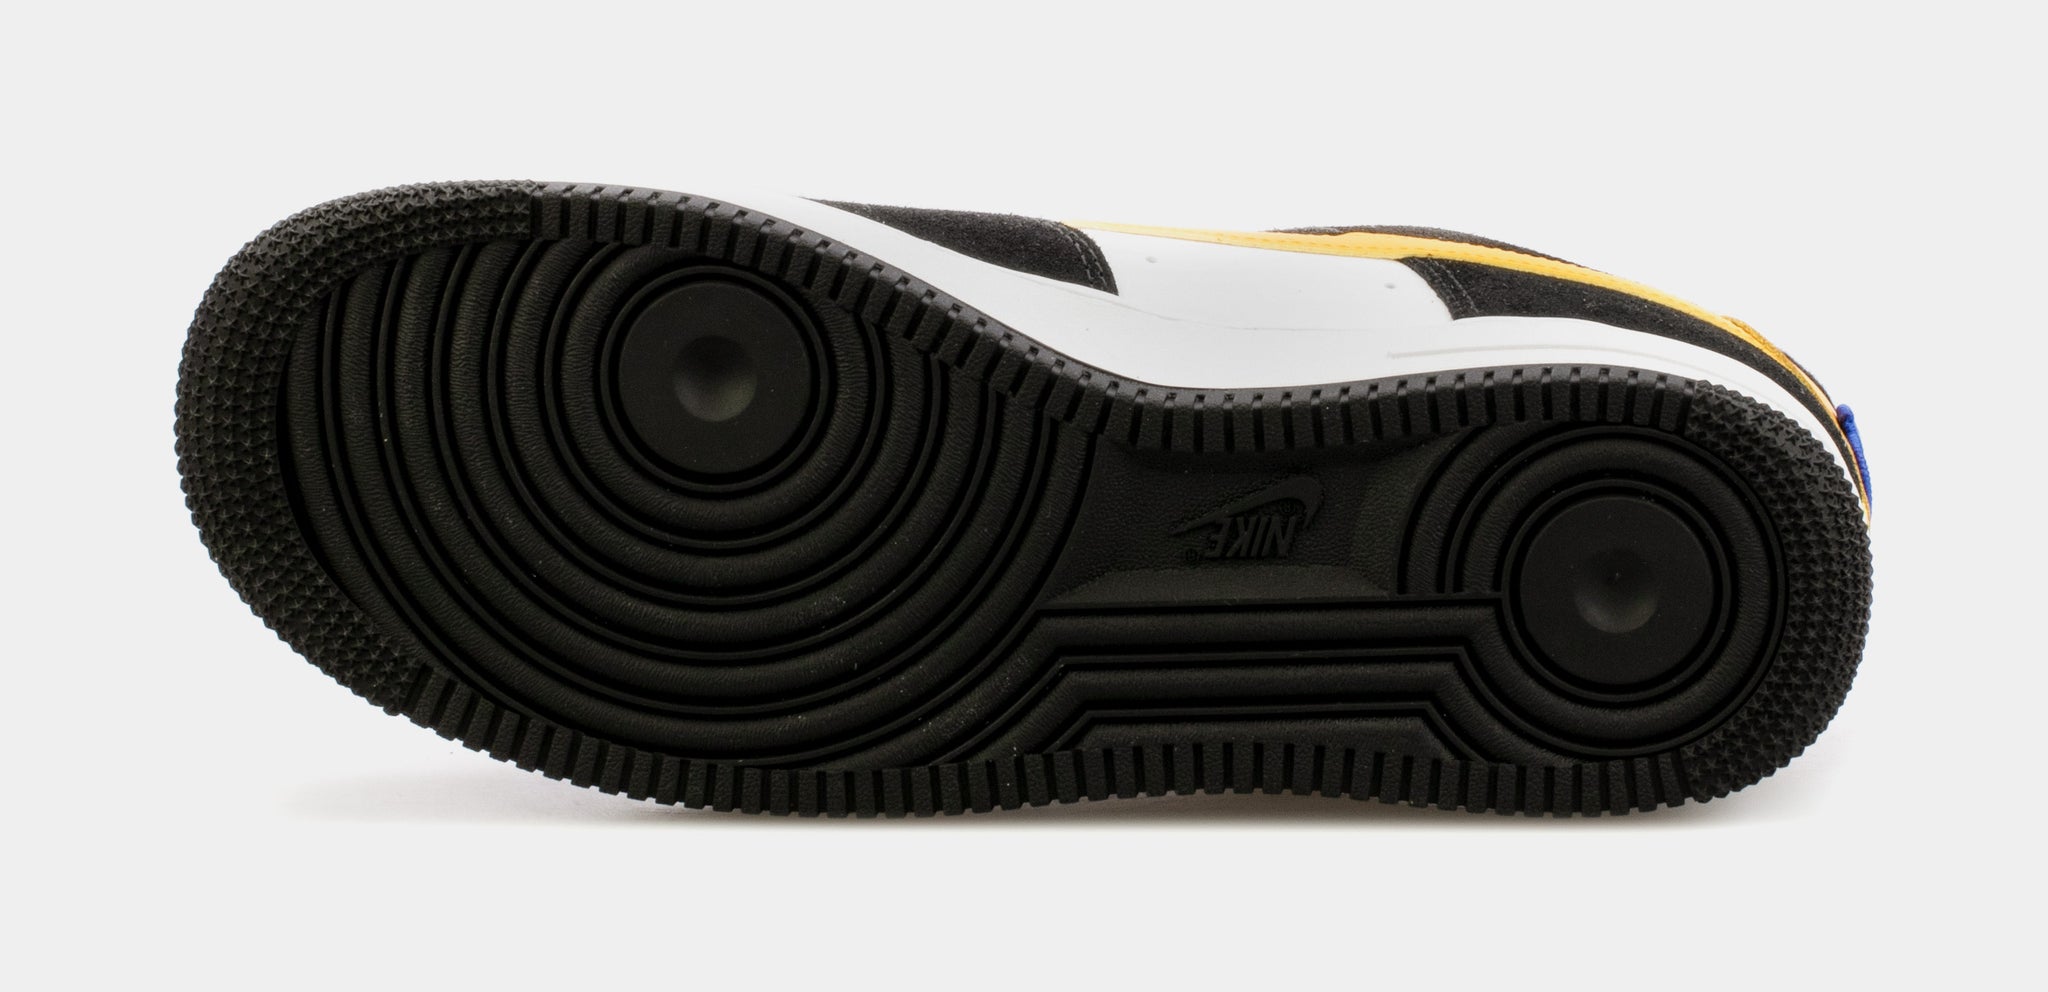 Nike Air Force 1 Low (Black/Gold)